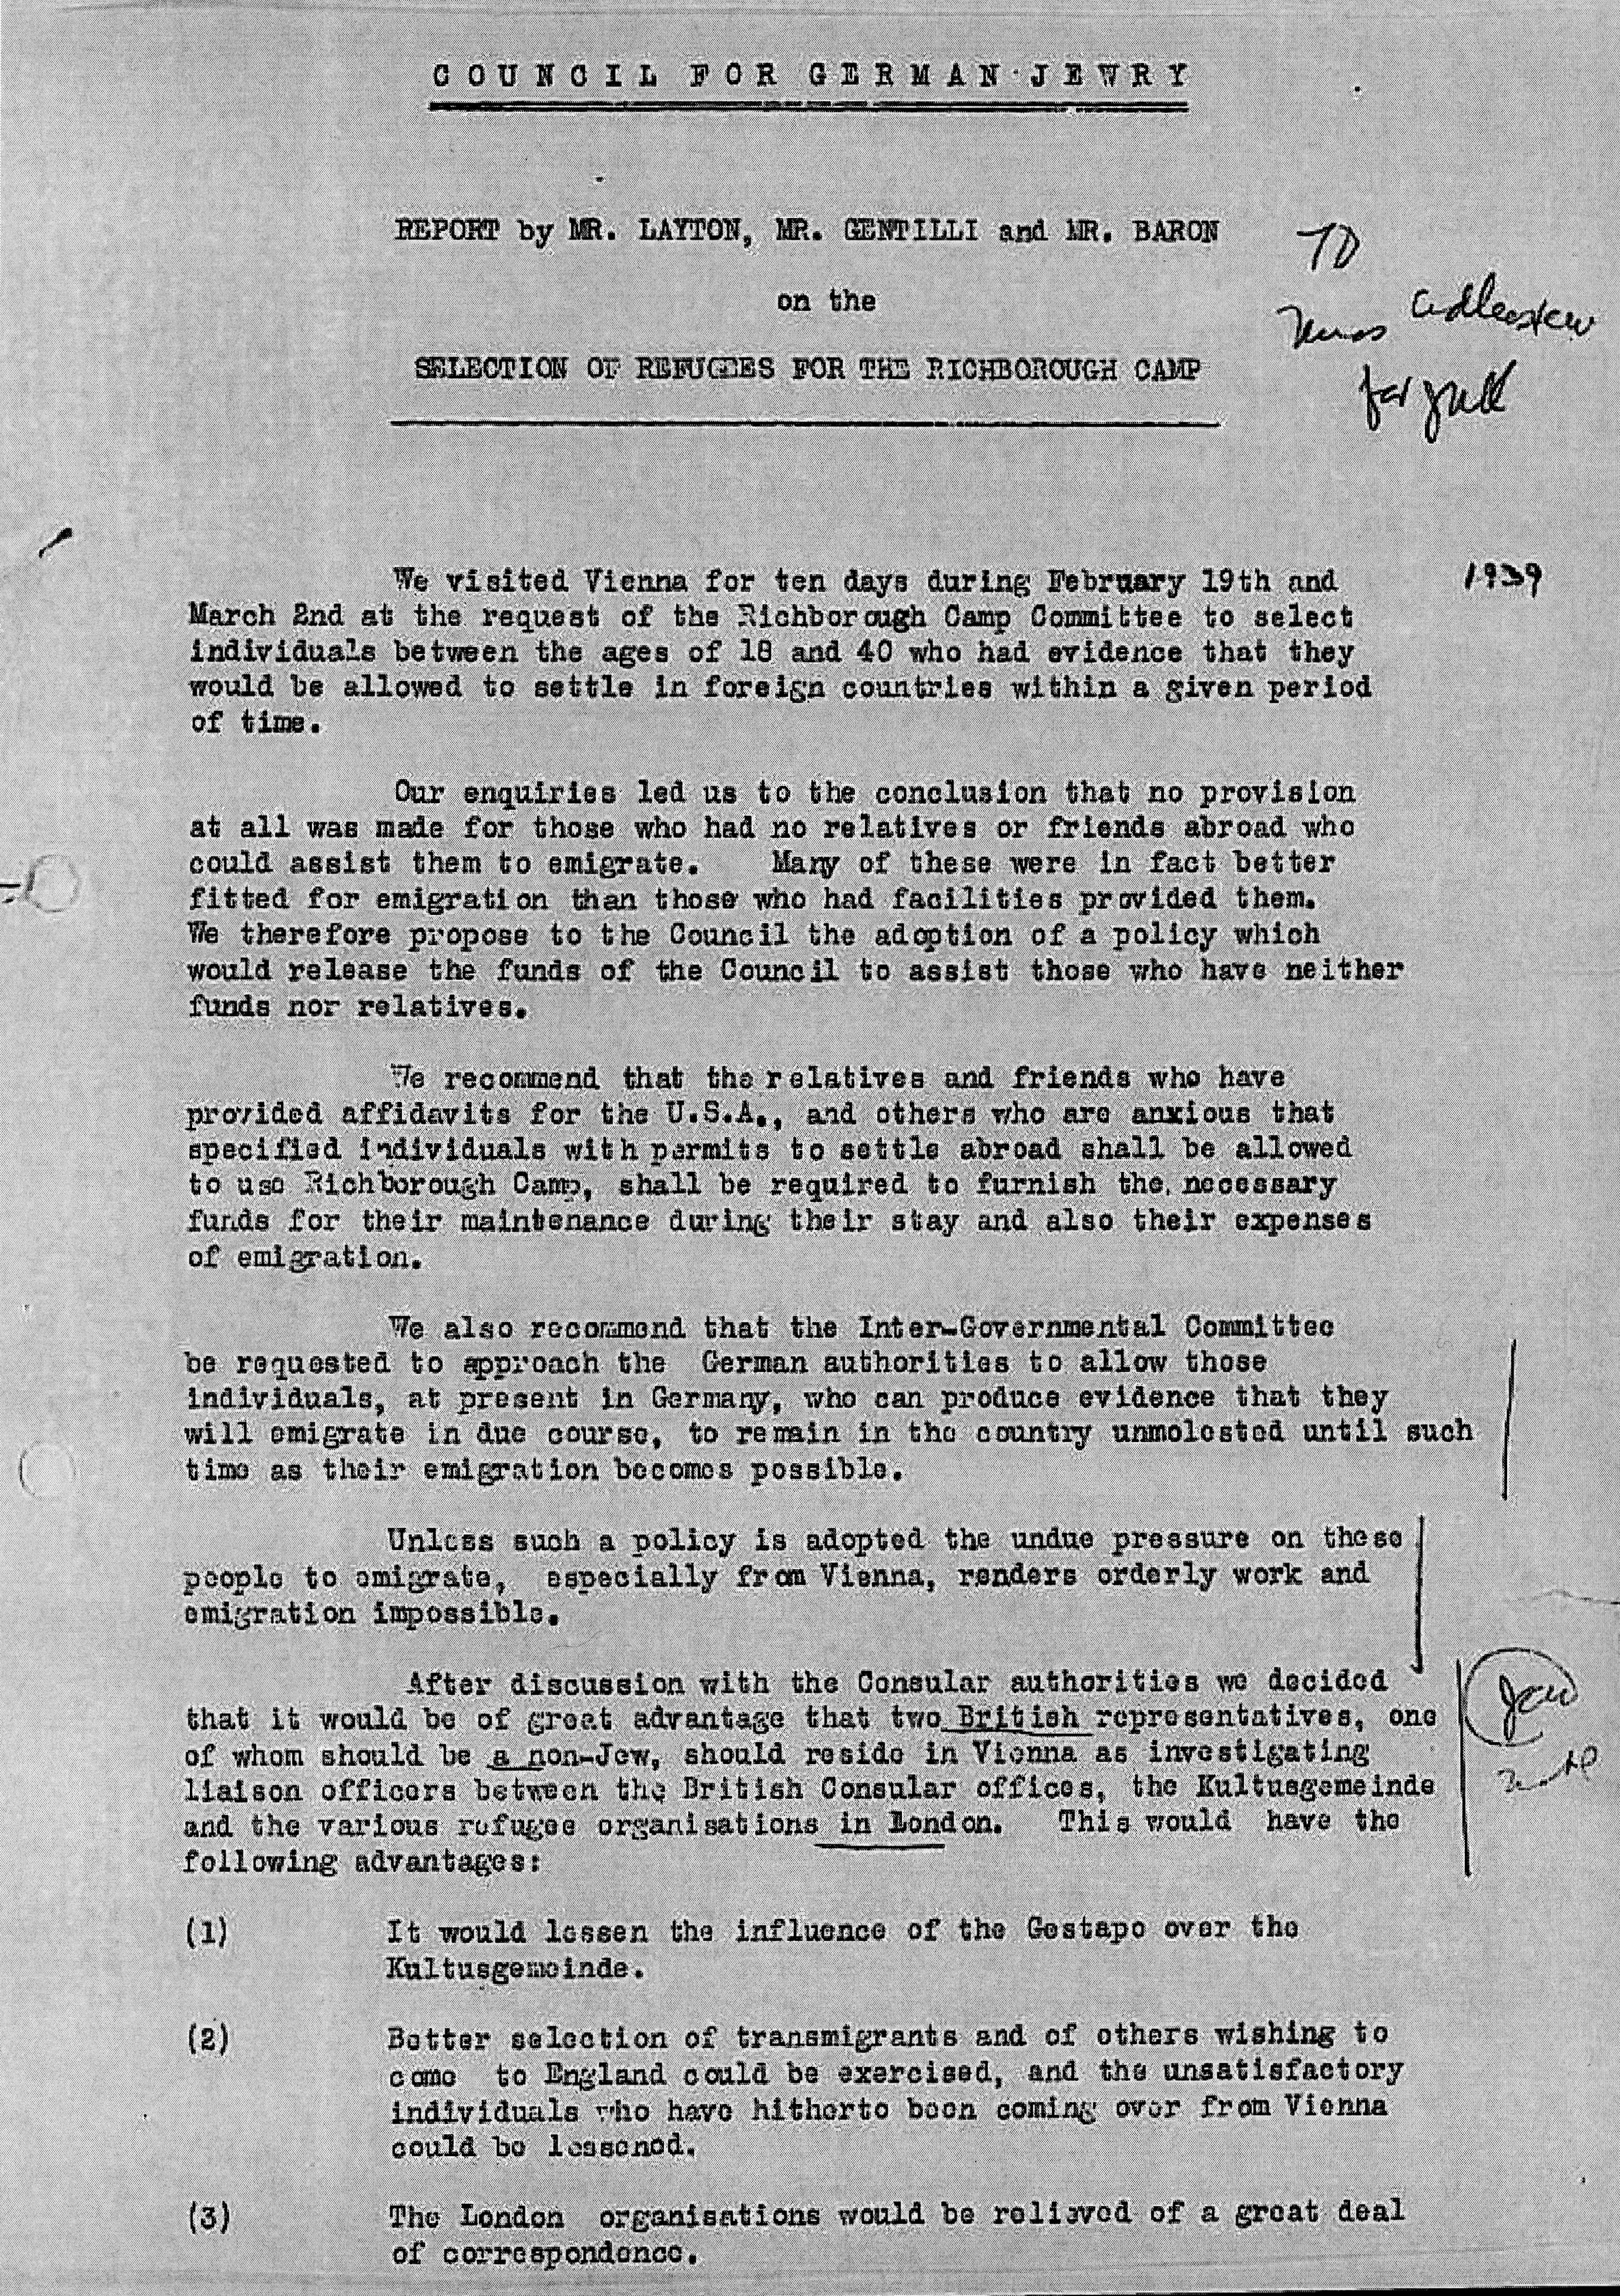 Kitchener camp, Council for German Jewry, Report, Mr Layton, Mr Gentilli, Mr Baron, Refugee selection, Vienna, 1939